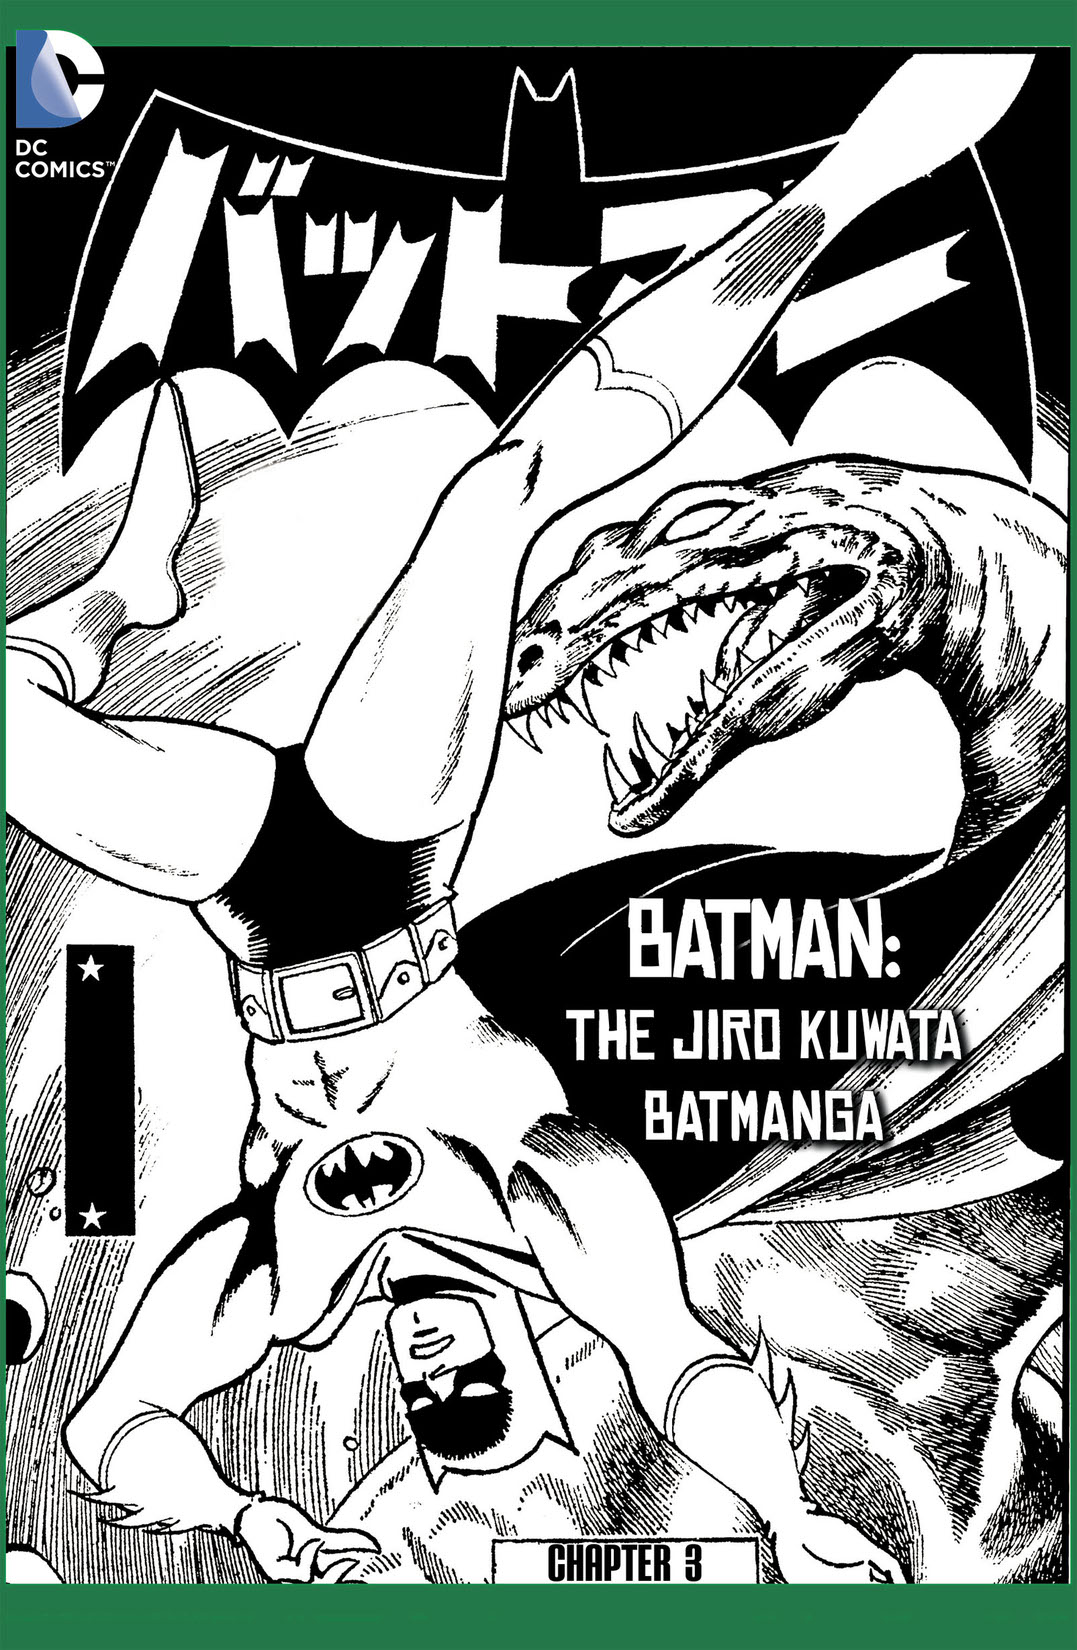 Batman: The Jiro Kuwata Batmanga #37 preview images